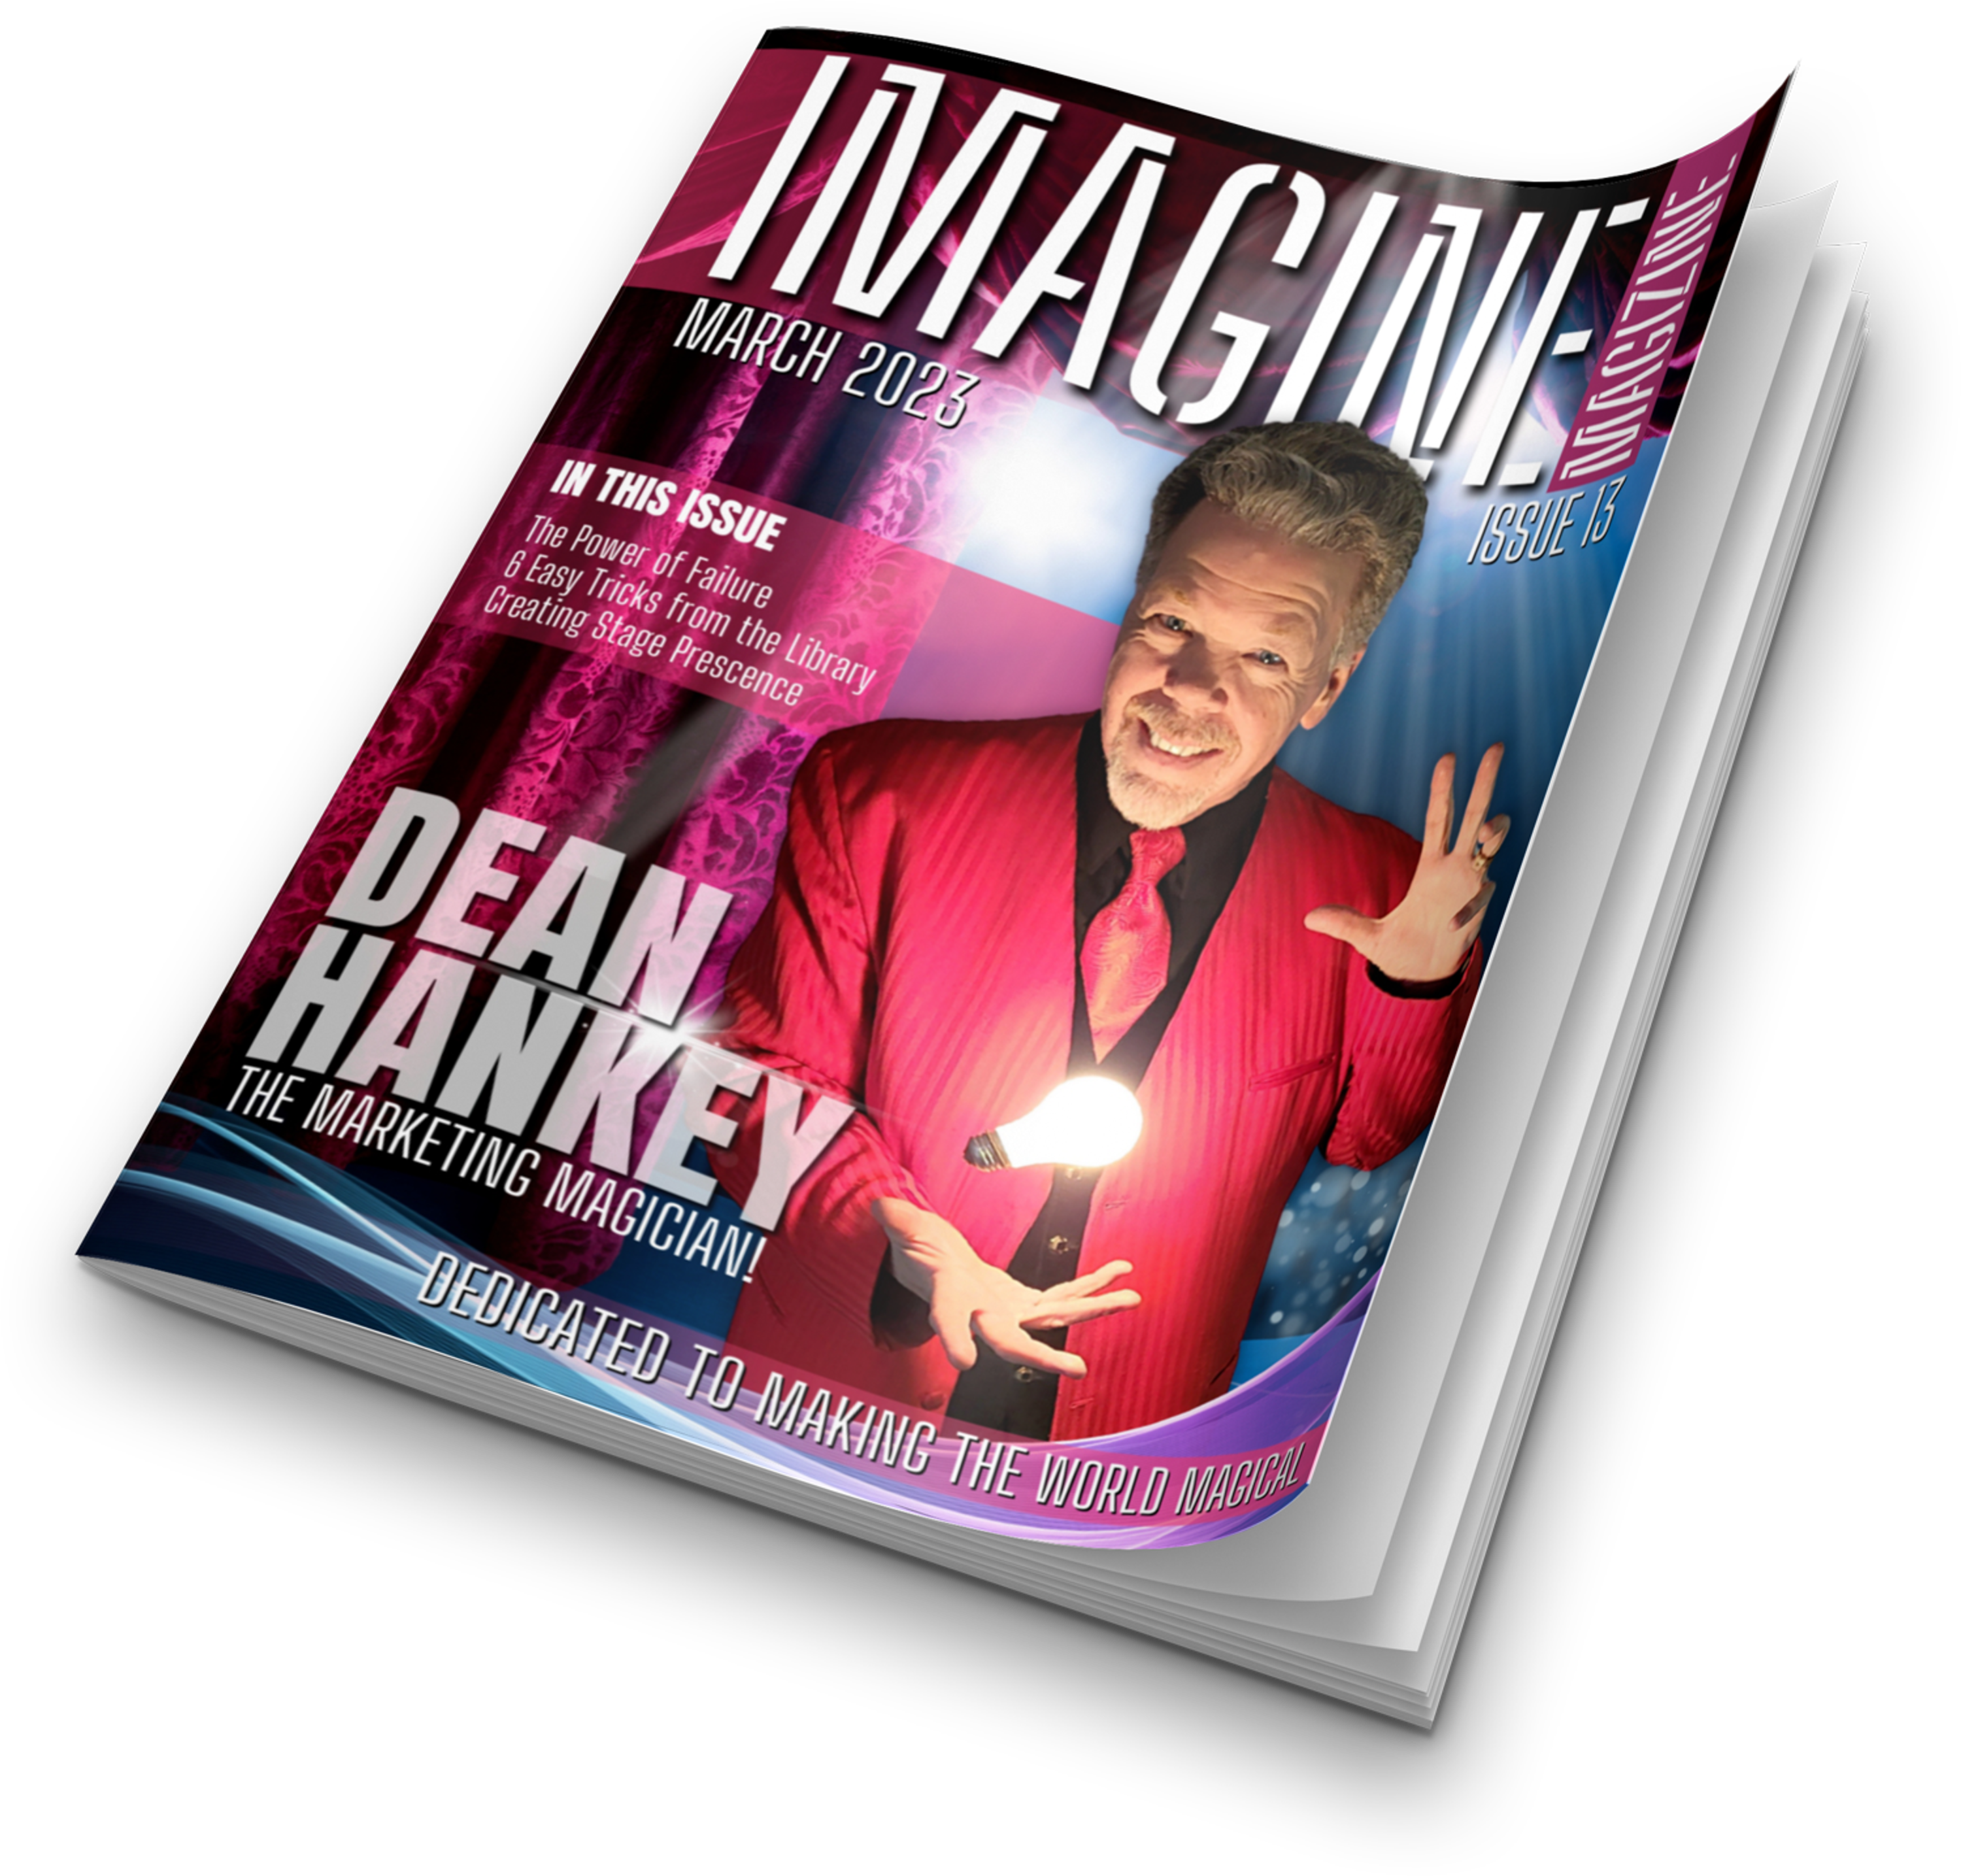 Dean Hankey, The DEAN of Success! VIP, 'Care-Is-Magic' Marketing Magician & People Pro! - Imagine MAGIzine Cover